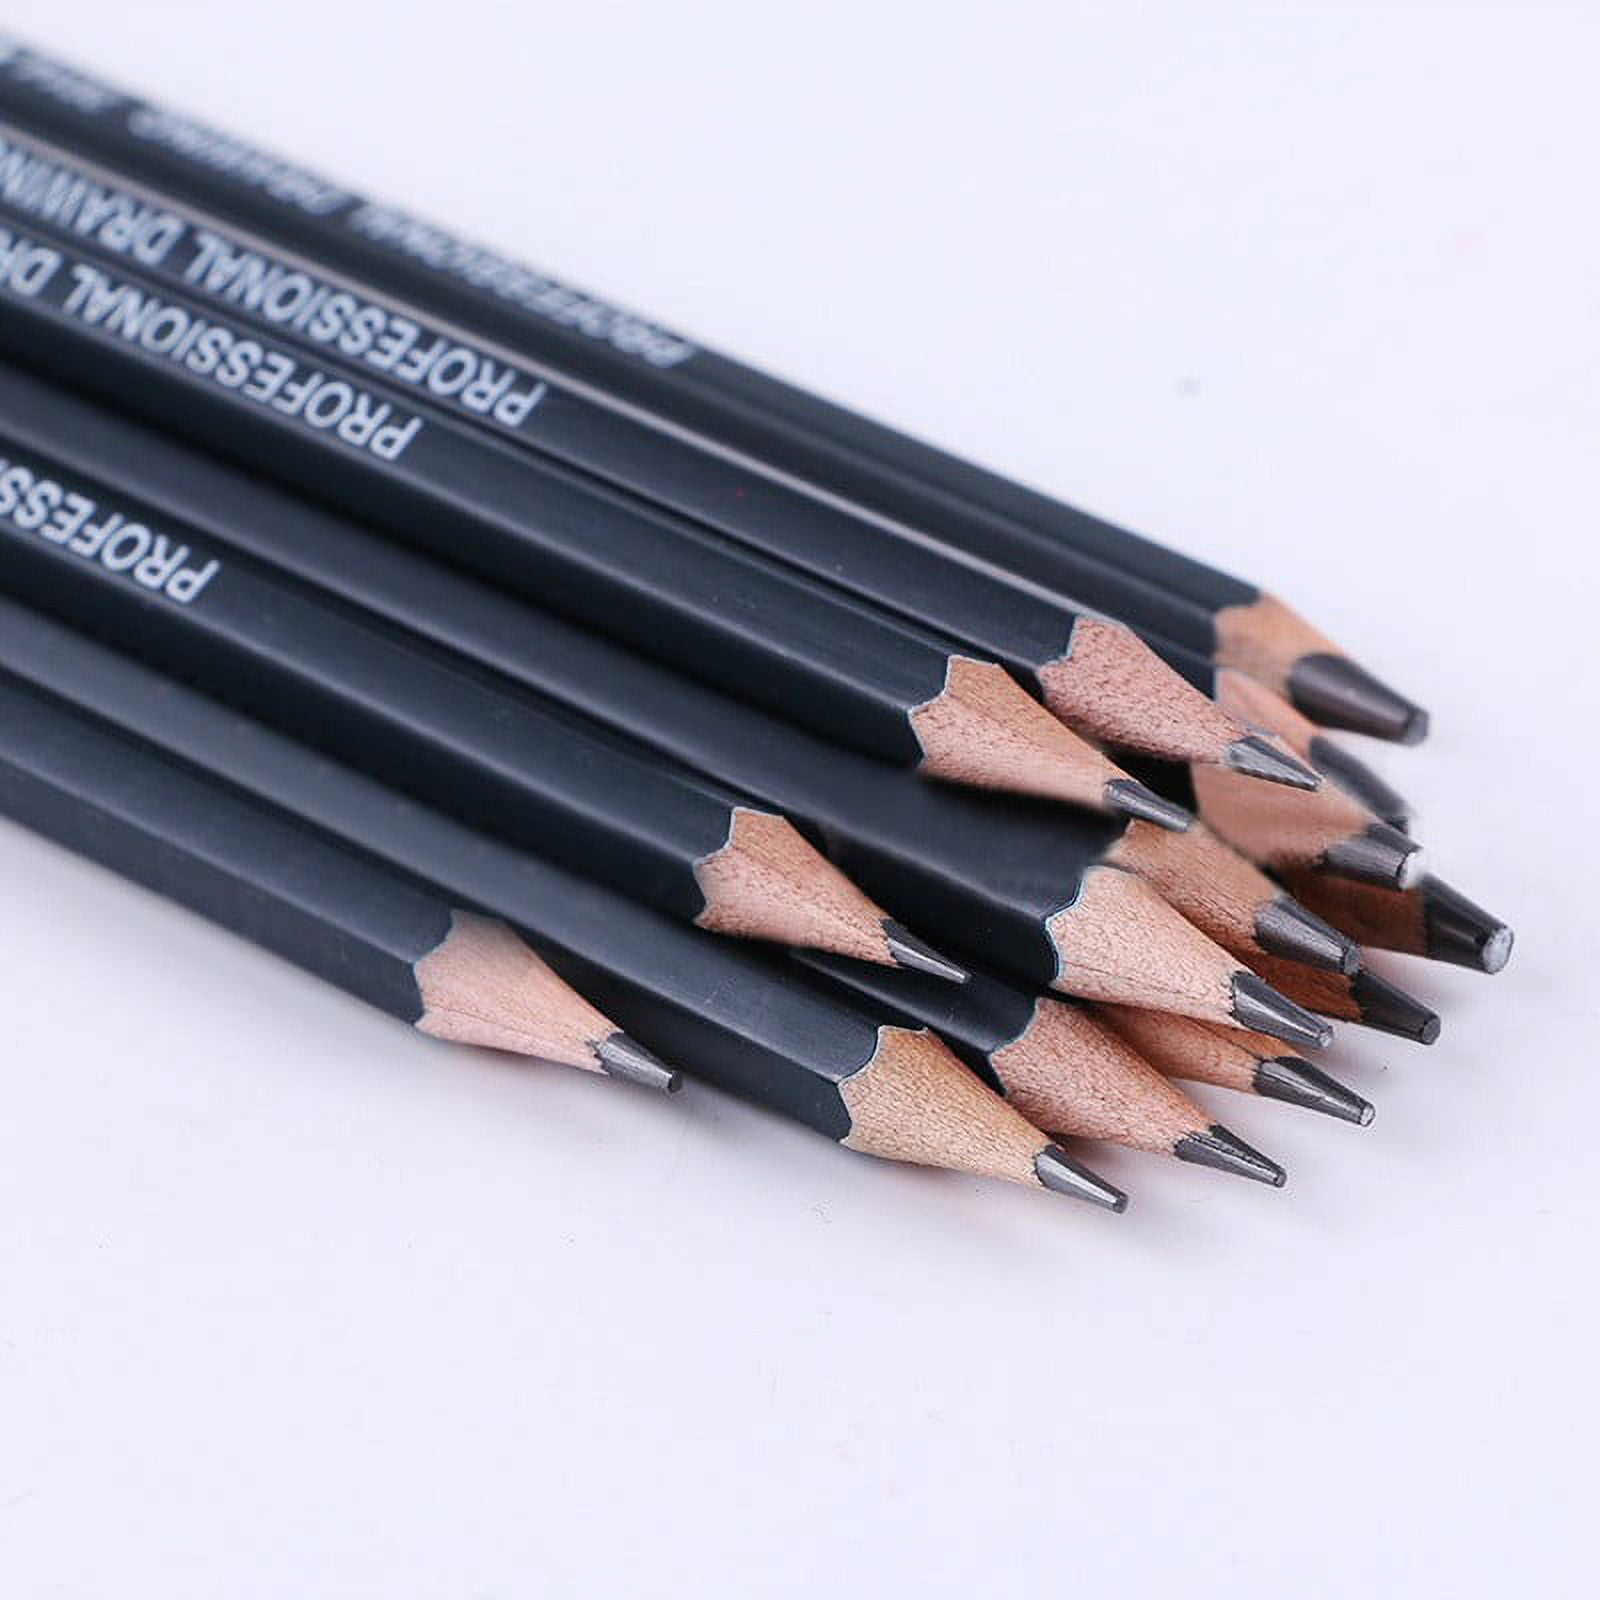 High-density Woodless Graphite Pencil Set Drawing Pencil Kit Essential  Sketching Pencils Art Pencils Set HB 2B 4B 6B 8B EE Assorted Degrees for